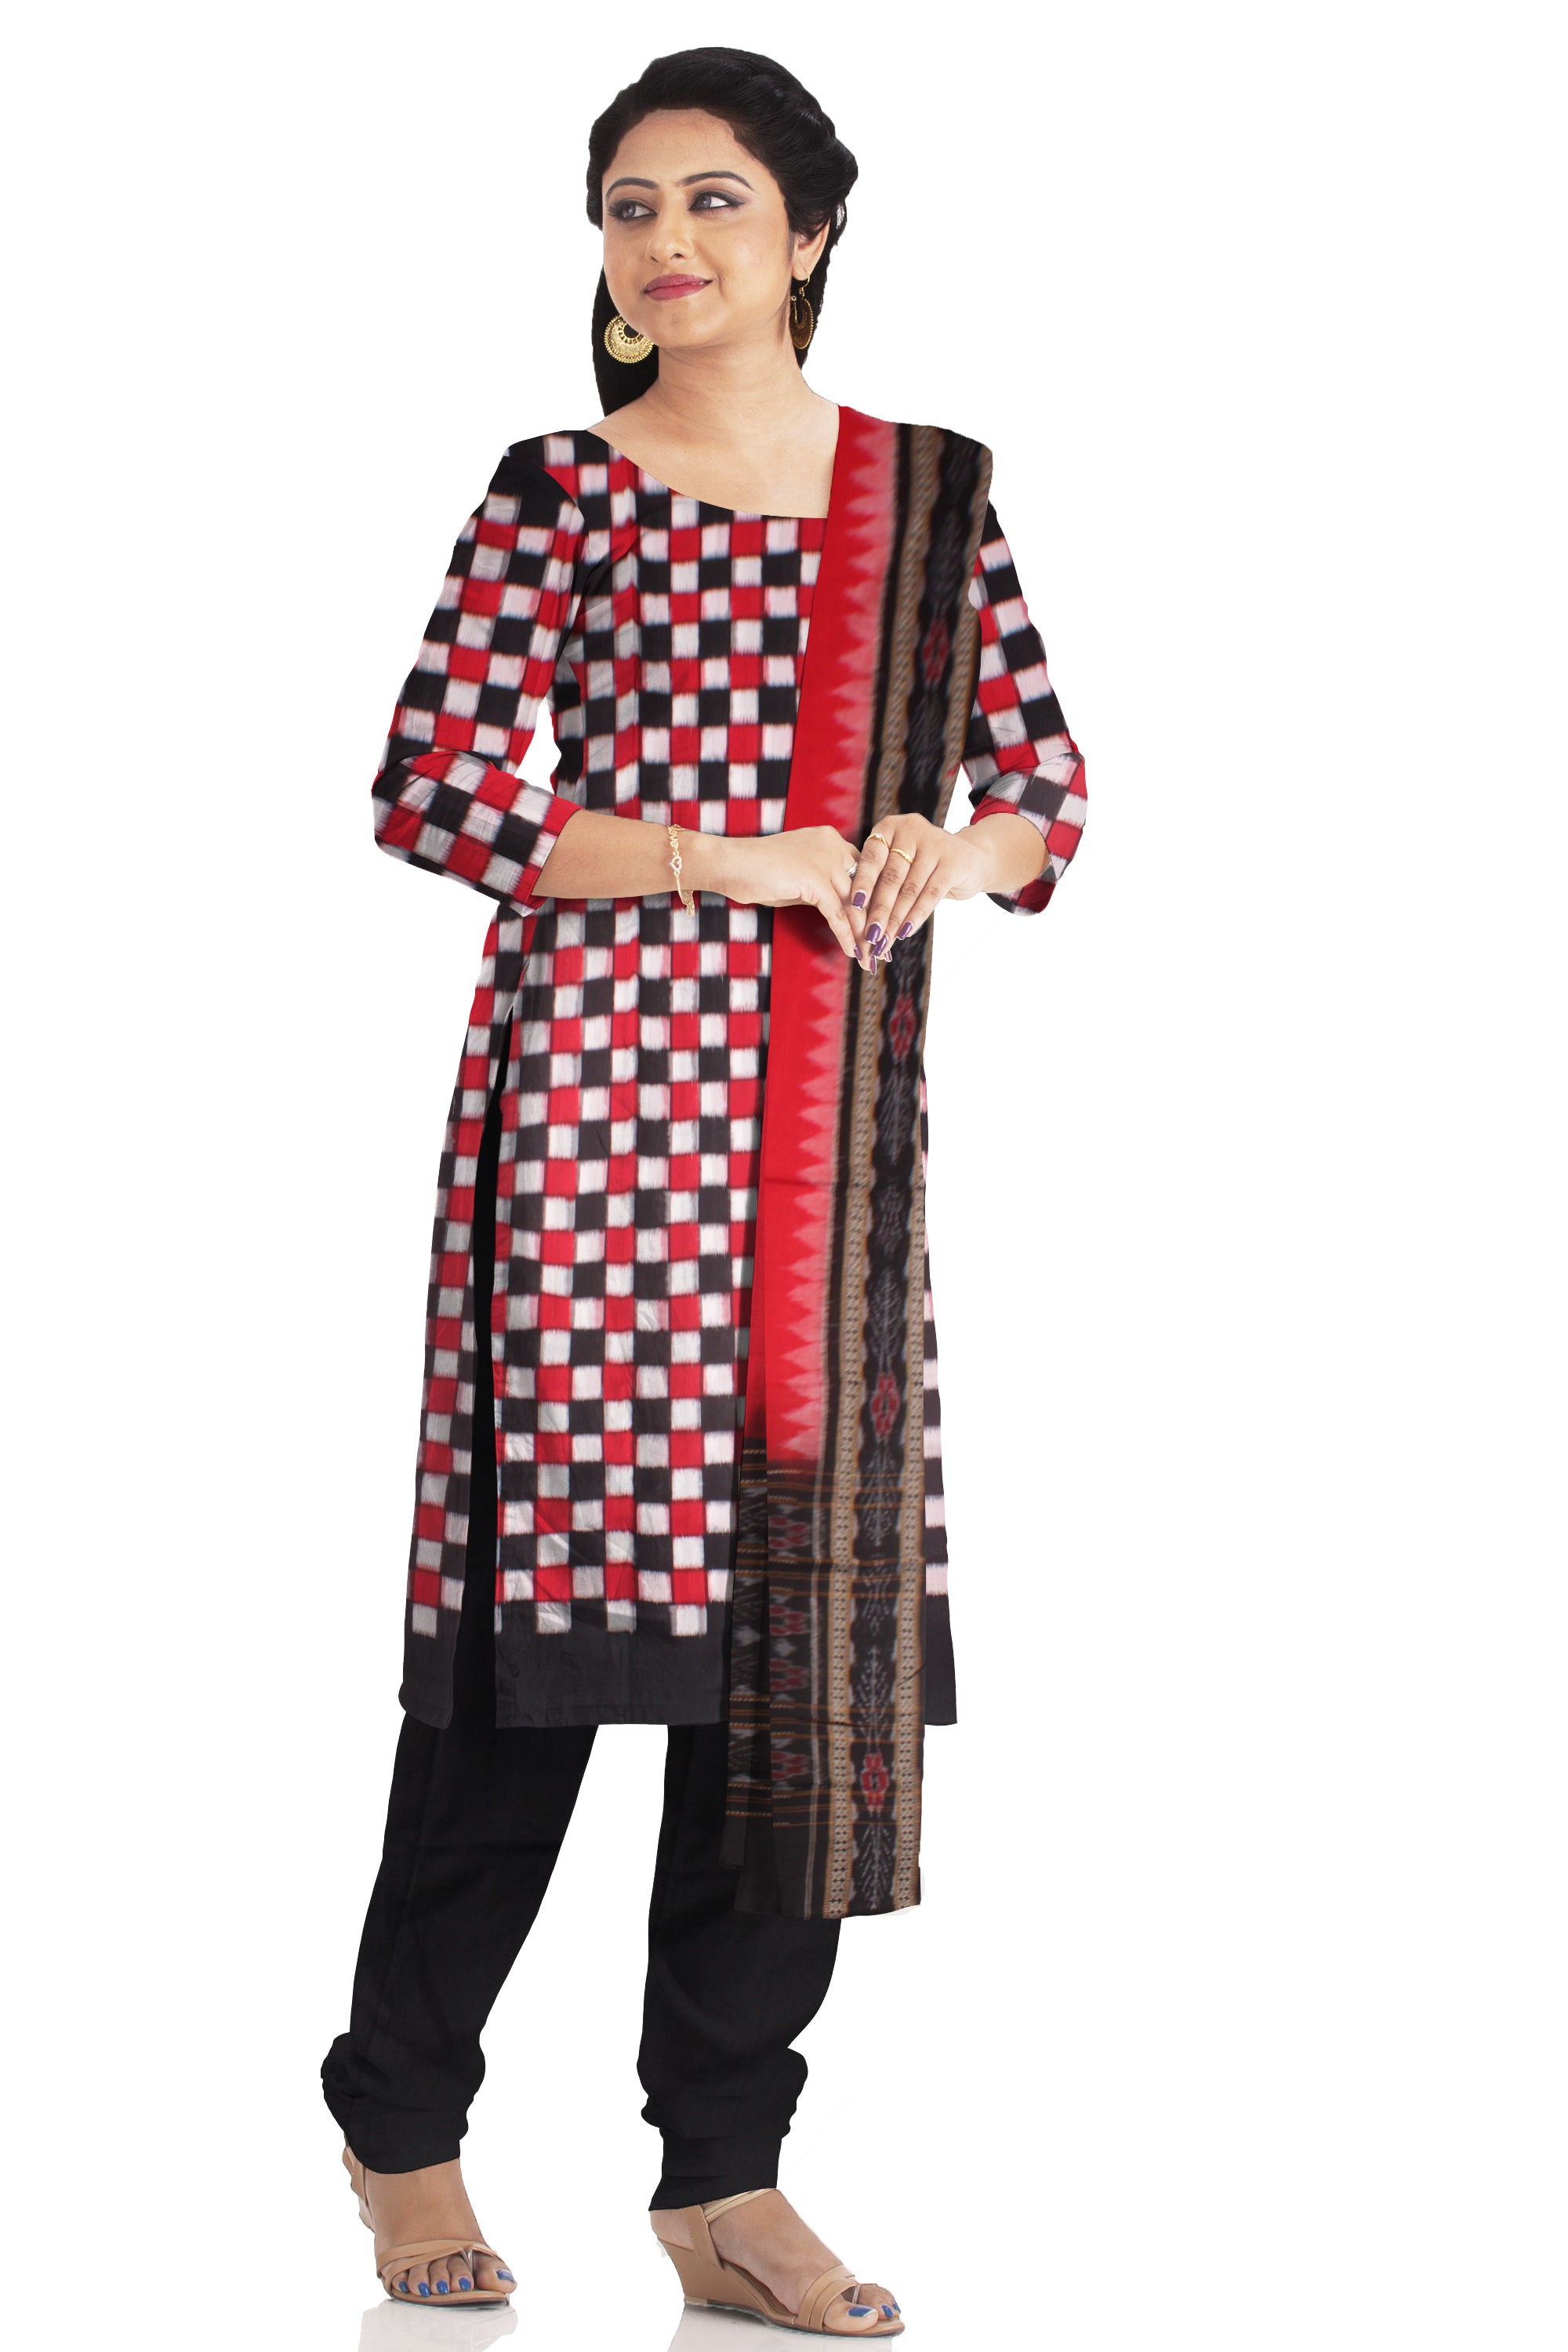 Sambalpuri dress Material💥Order from Bargarh 💥Price Only  250/-💥@HirakudVlogger55 - YouTube